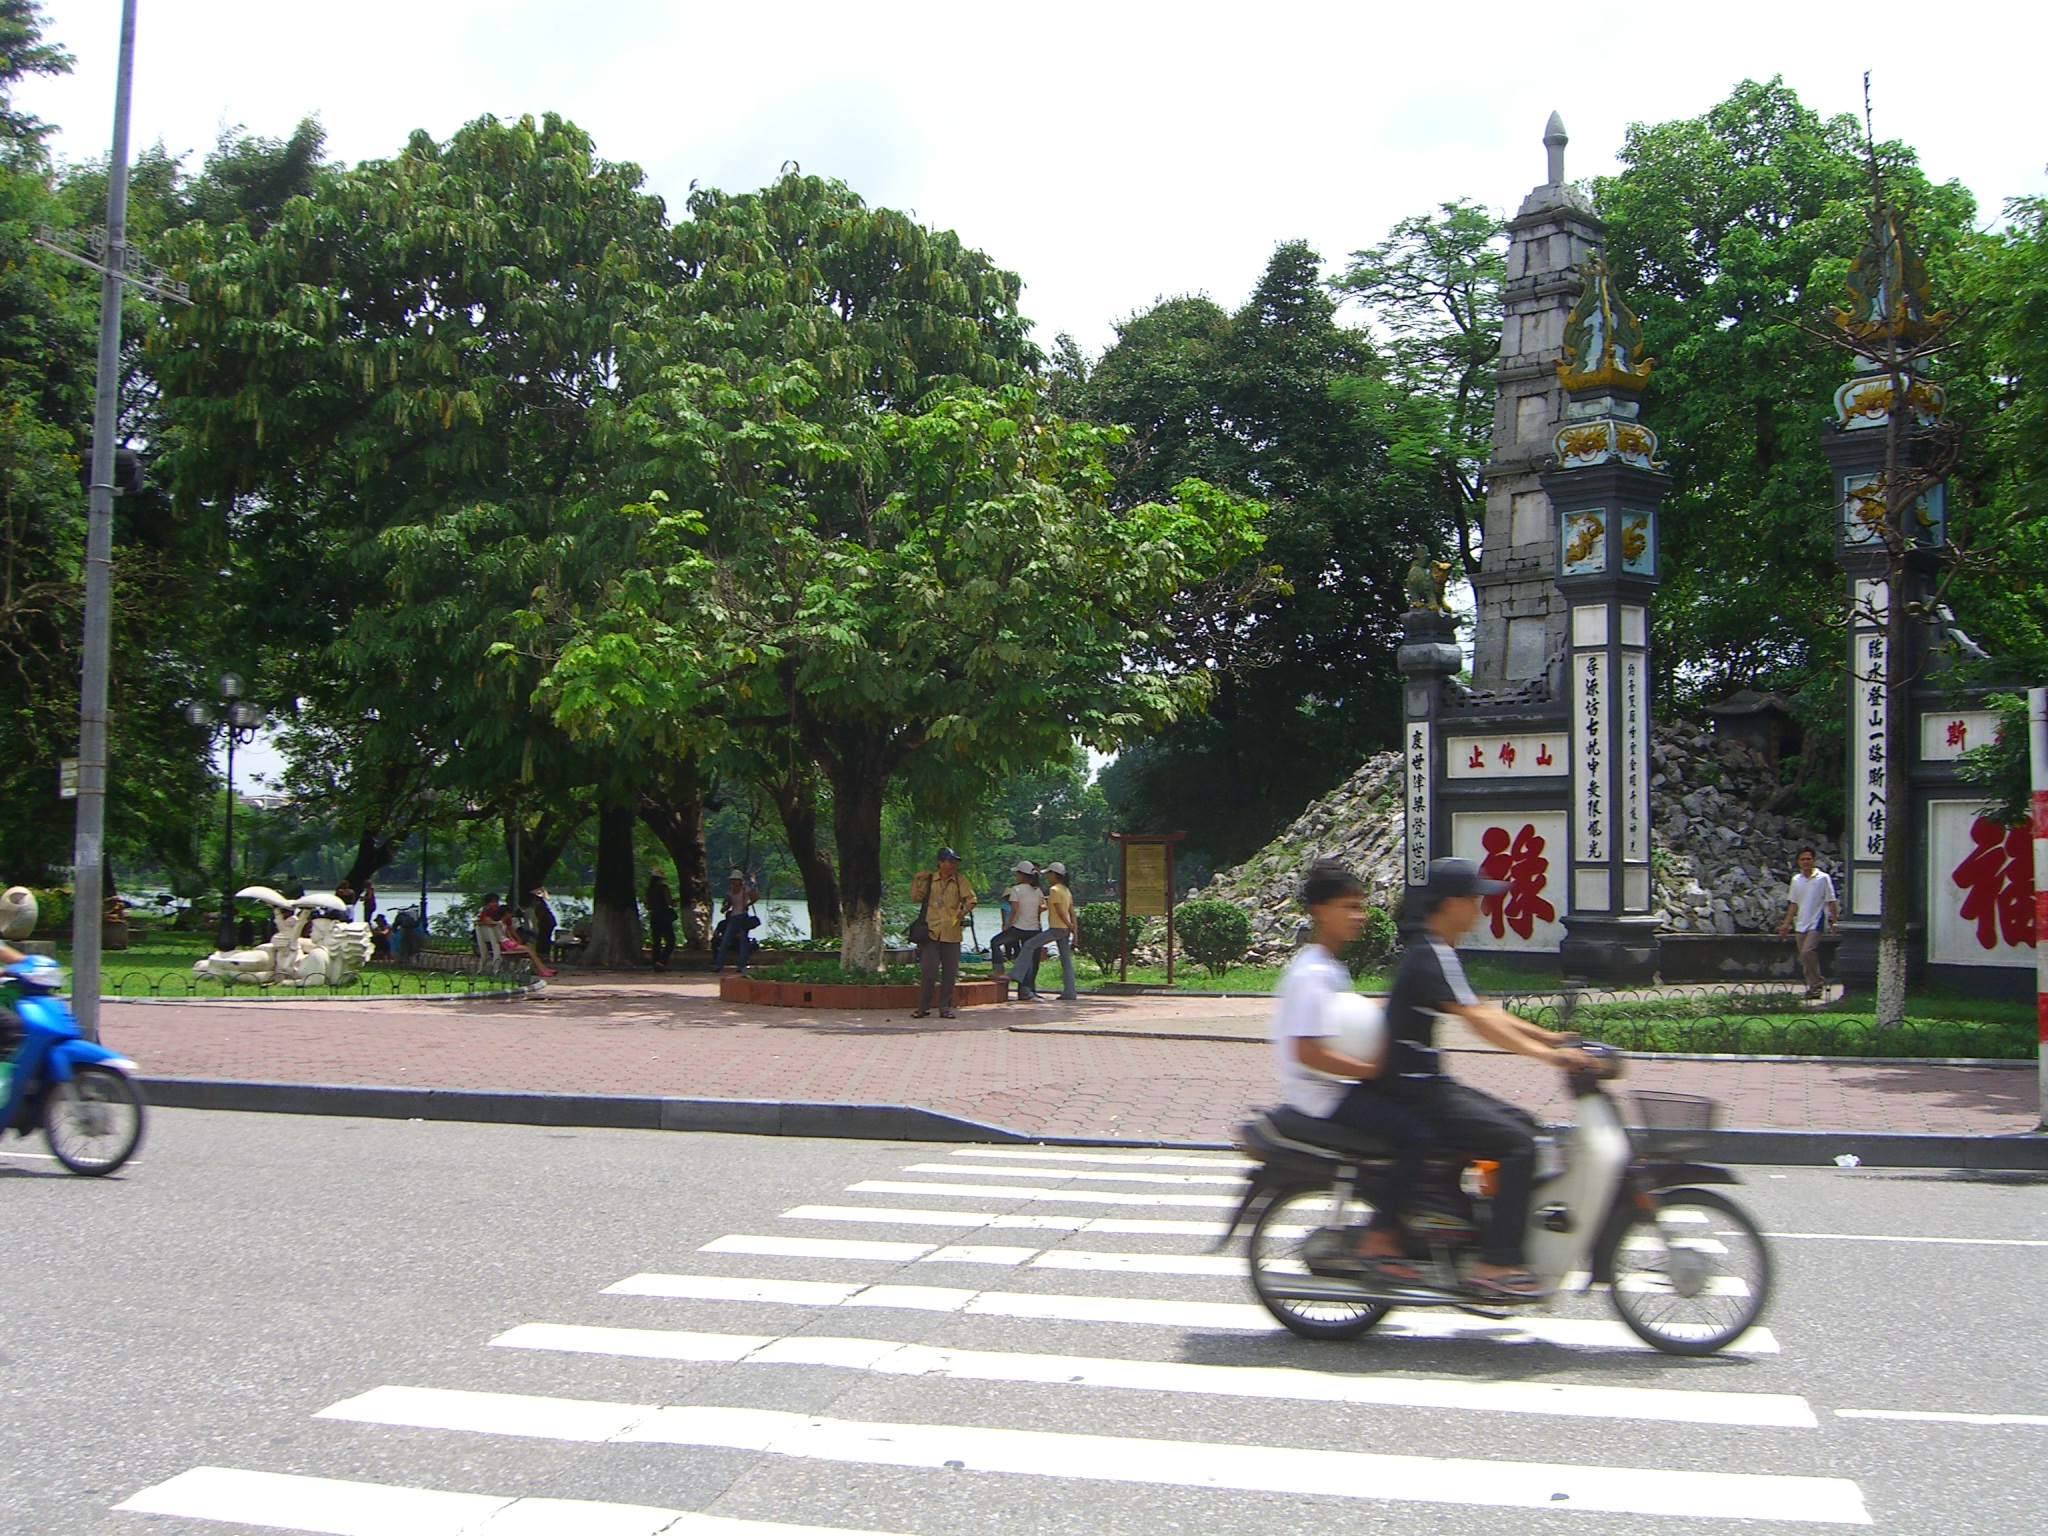 a man riding a motorcycle down a street near a tall clock